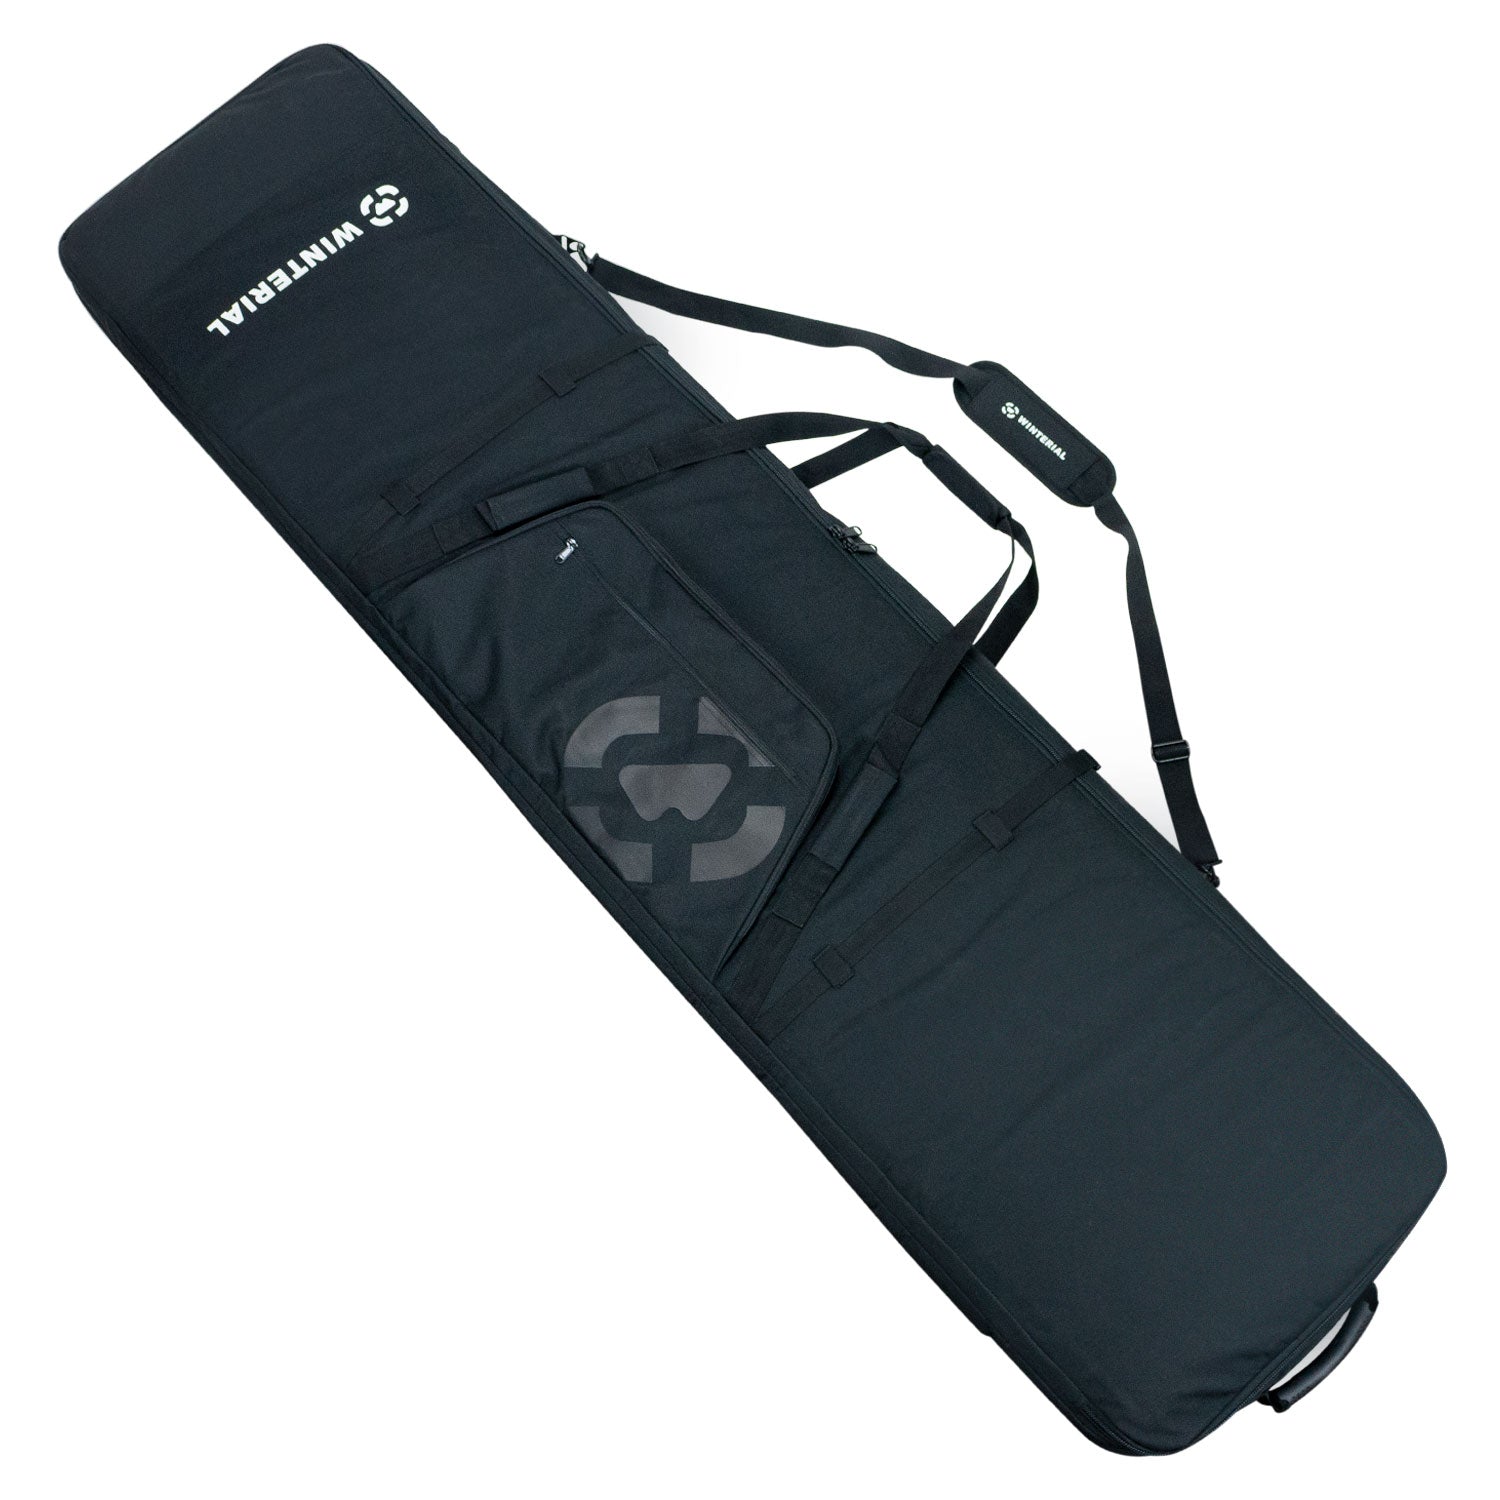 Wheeled protective travel soft ski bag